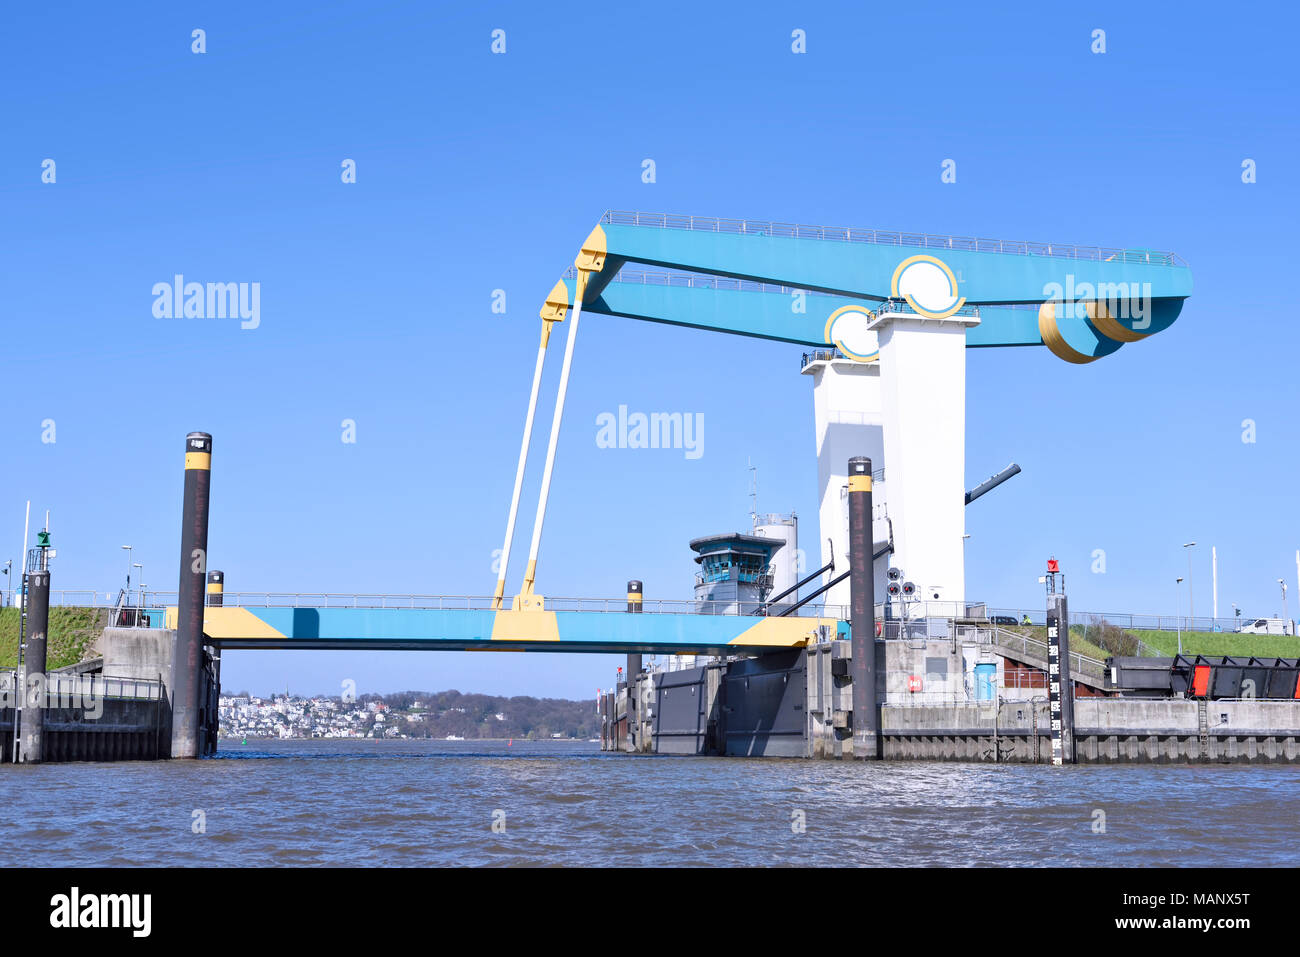 Drawbridge on a river, shipping or ship transport monument. Germany, Hamburg. Stock Photo